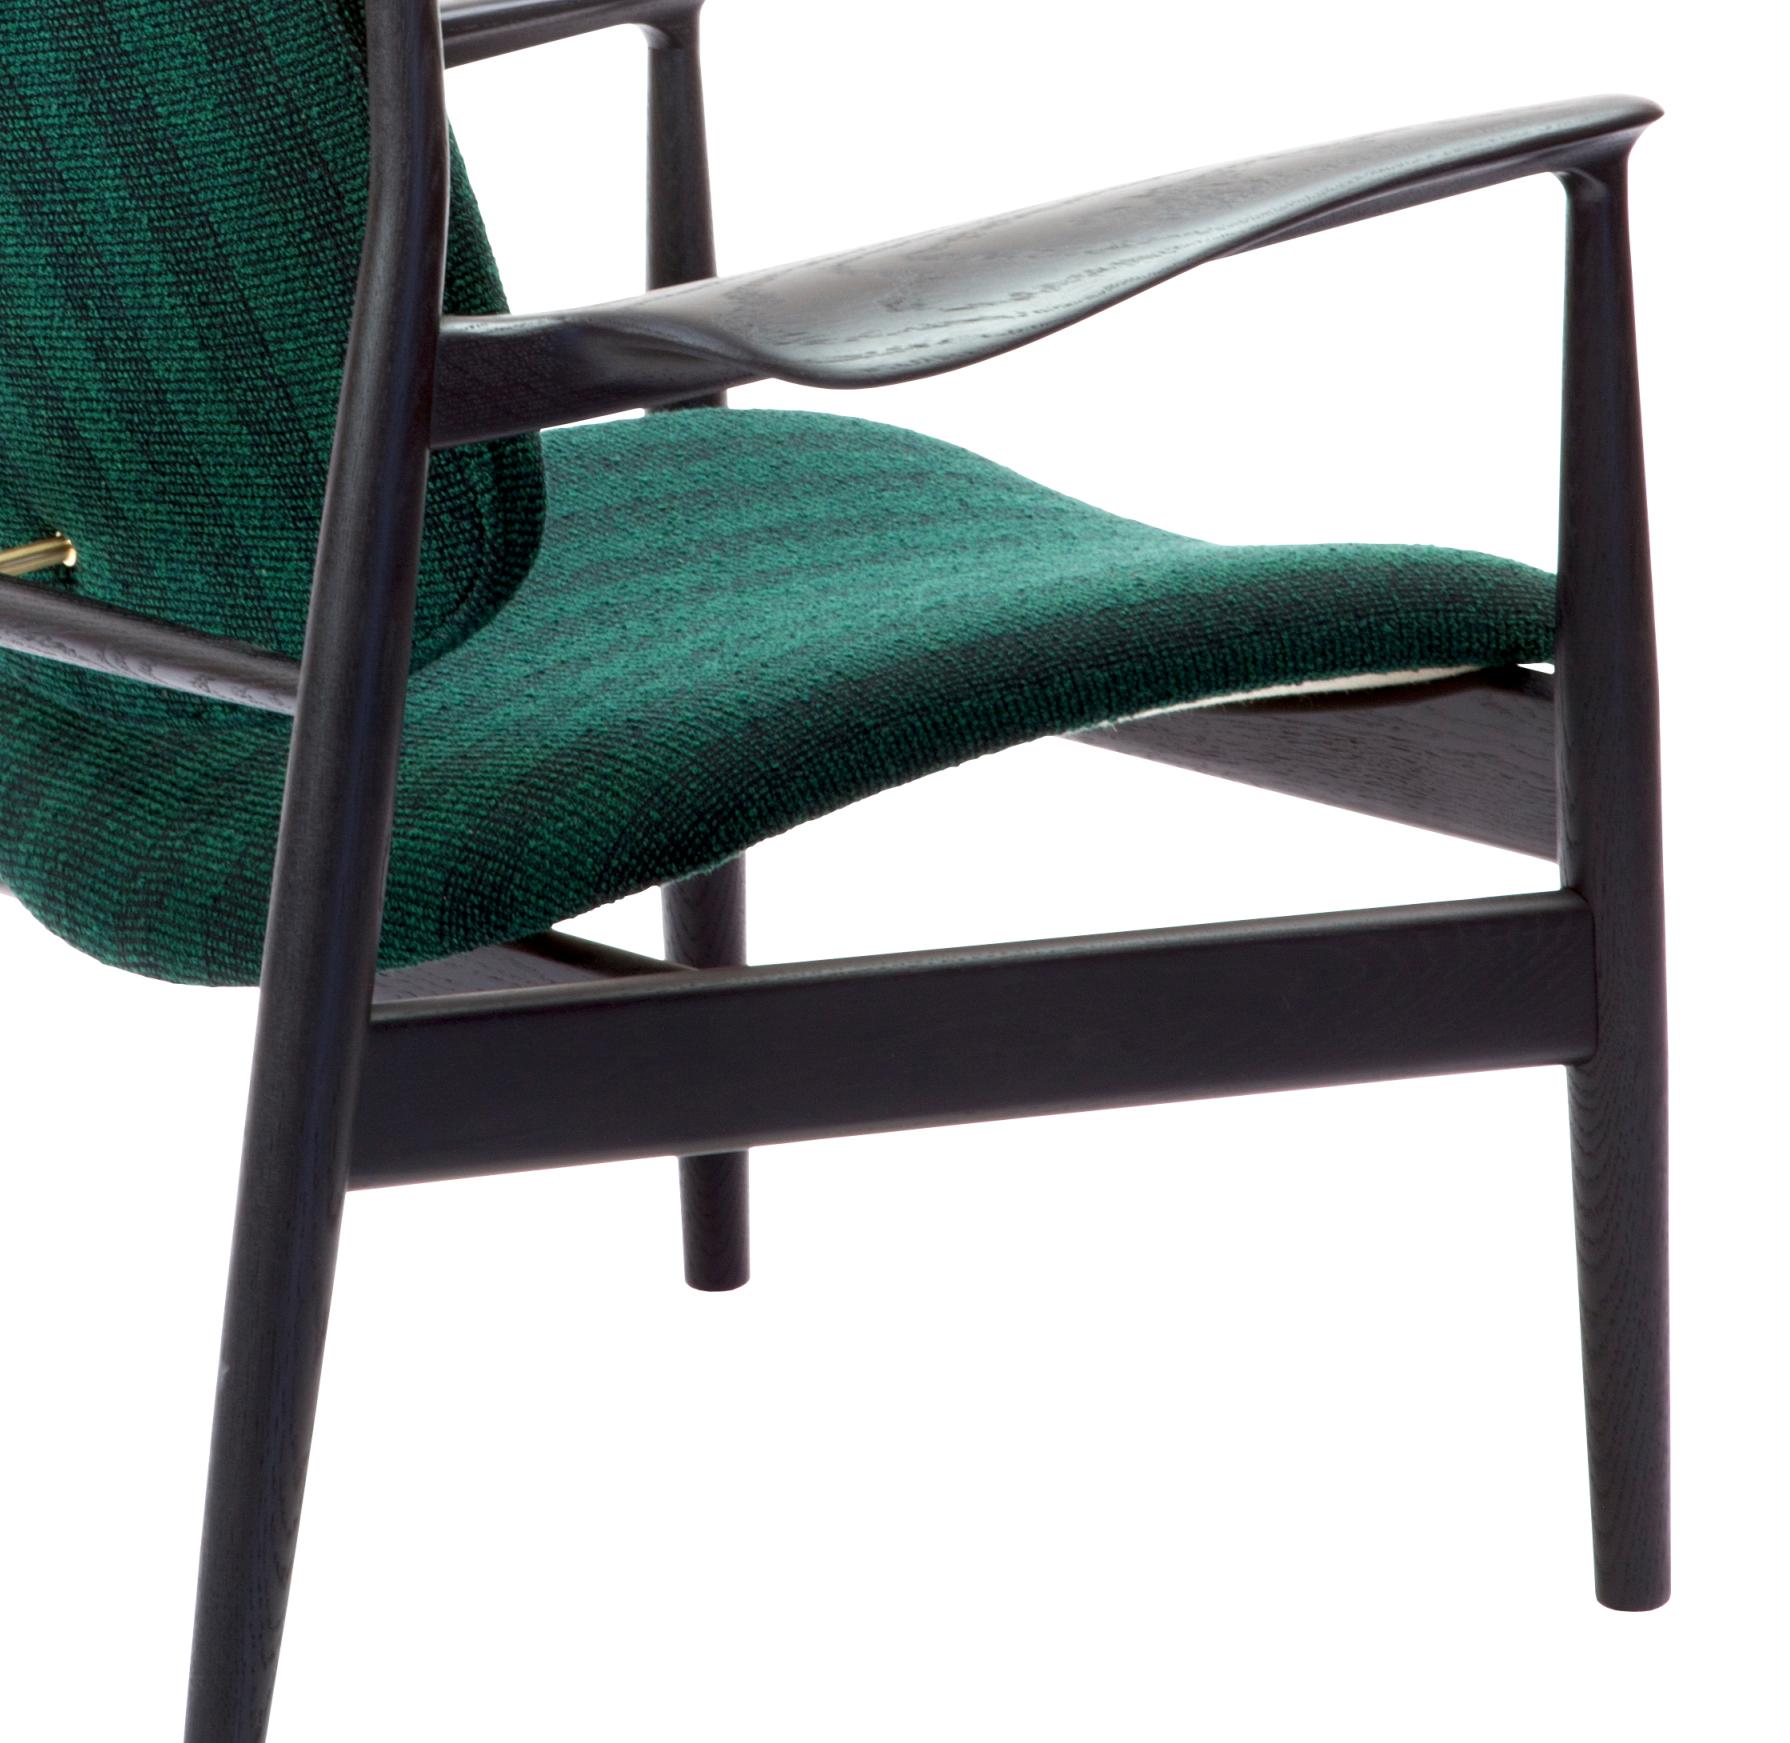 Scandinavian Modern Finn Juhl France Chair in Wood and Green Upholstery